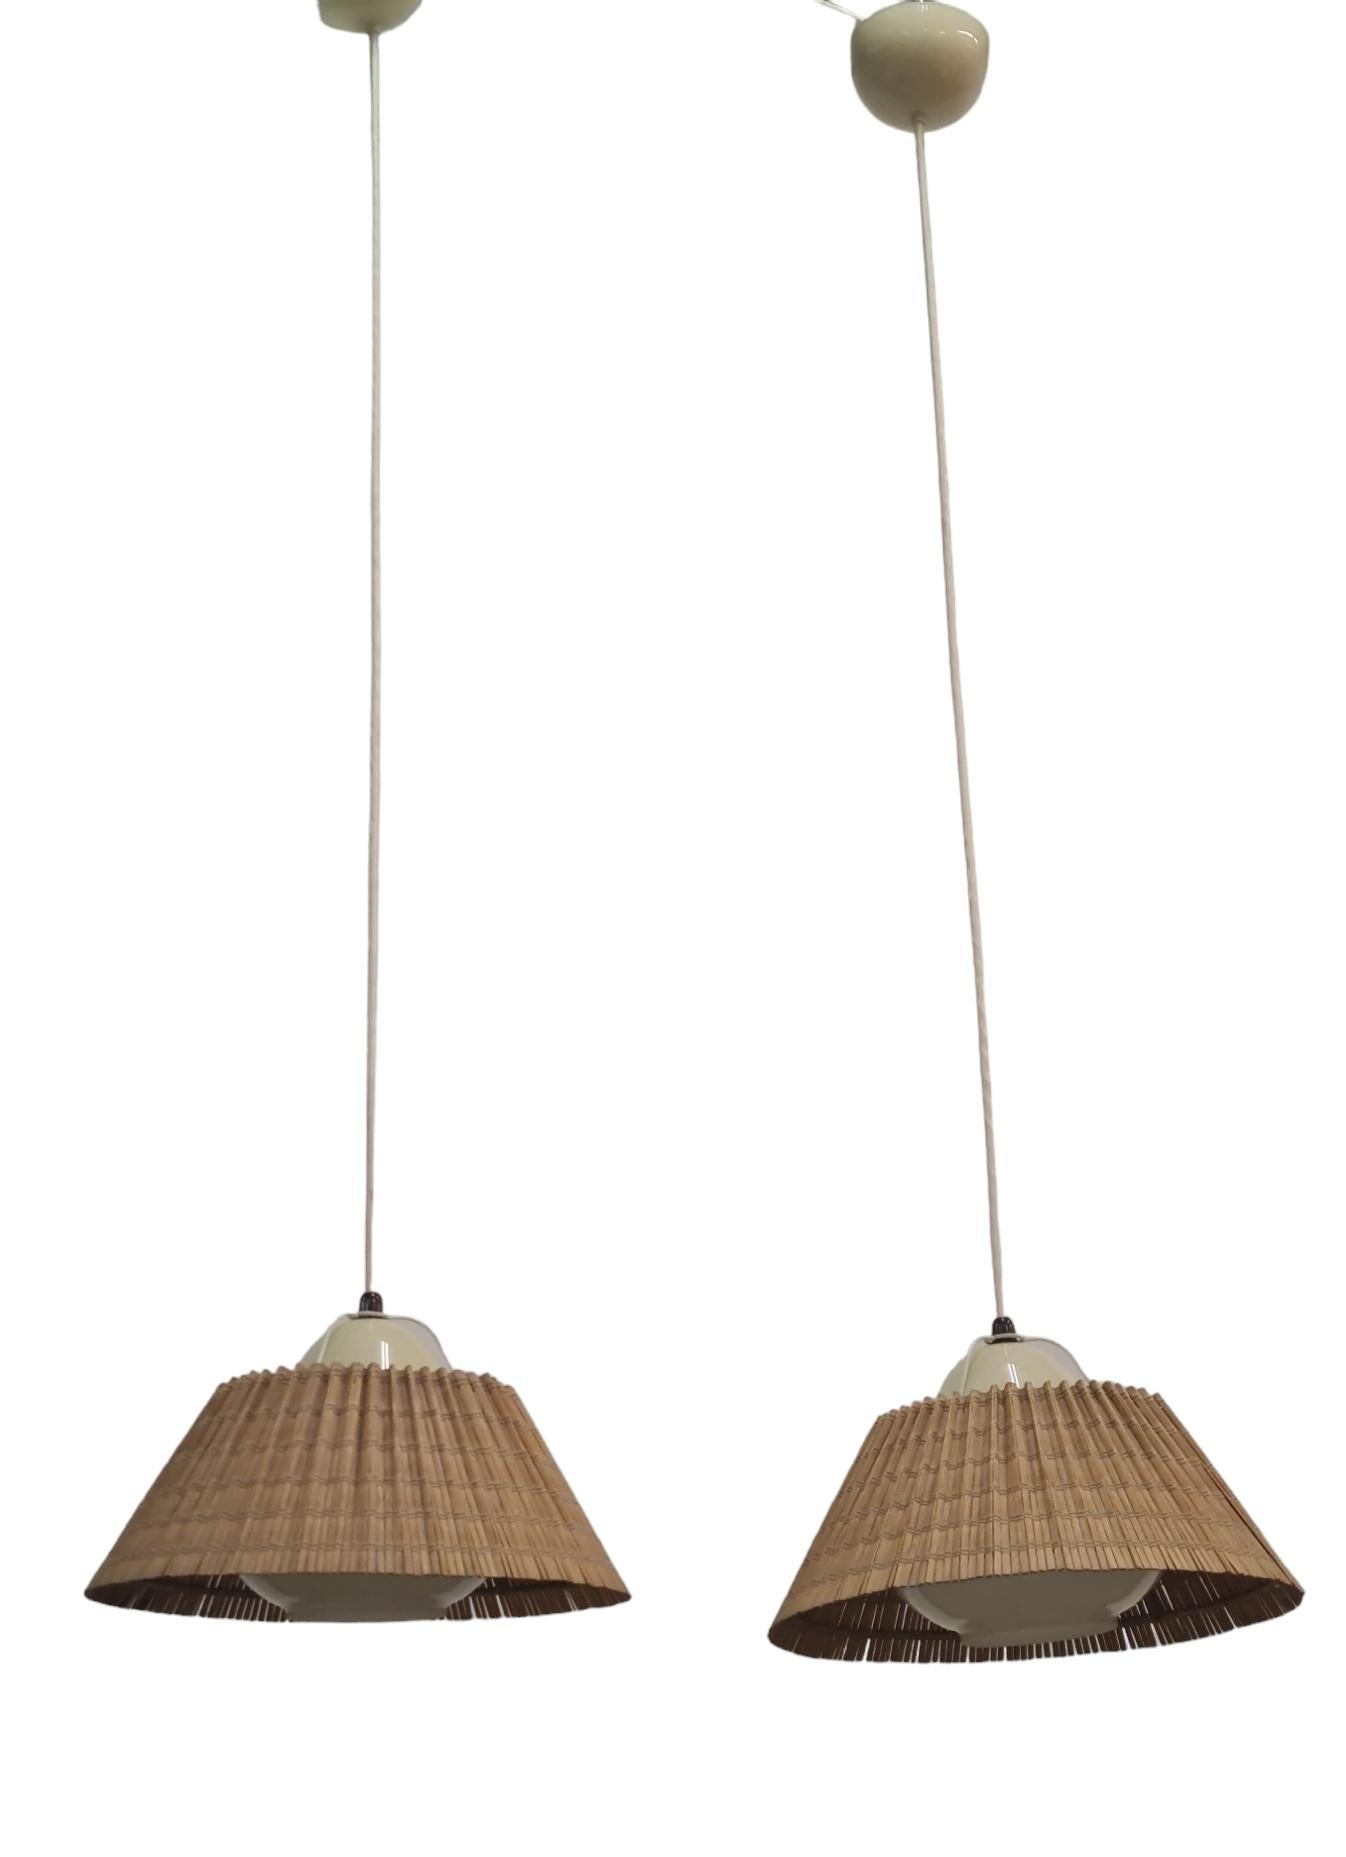 Lisa Johansson Pape, Pair of Ceiling Lamp Model 982, Stockmann For Sale 11